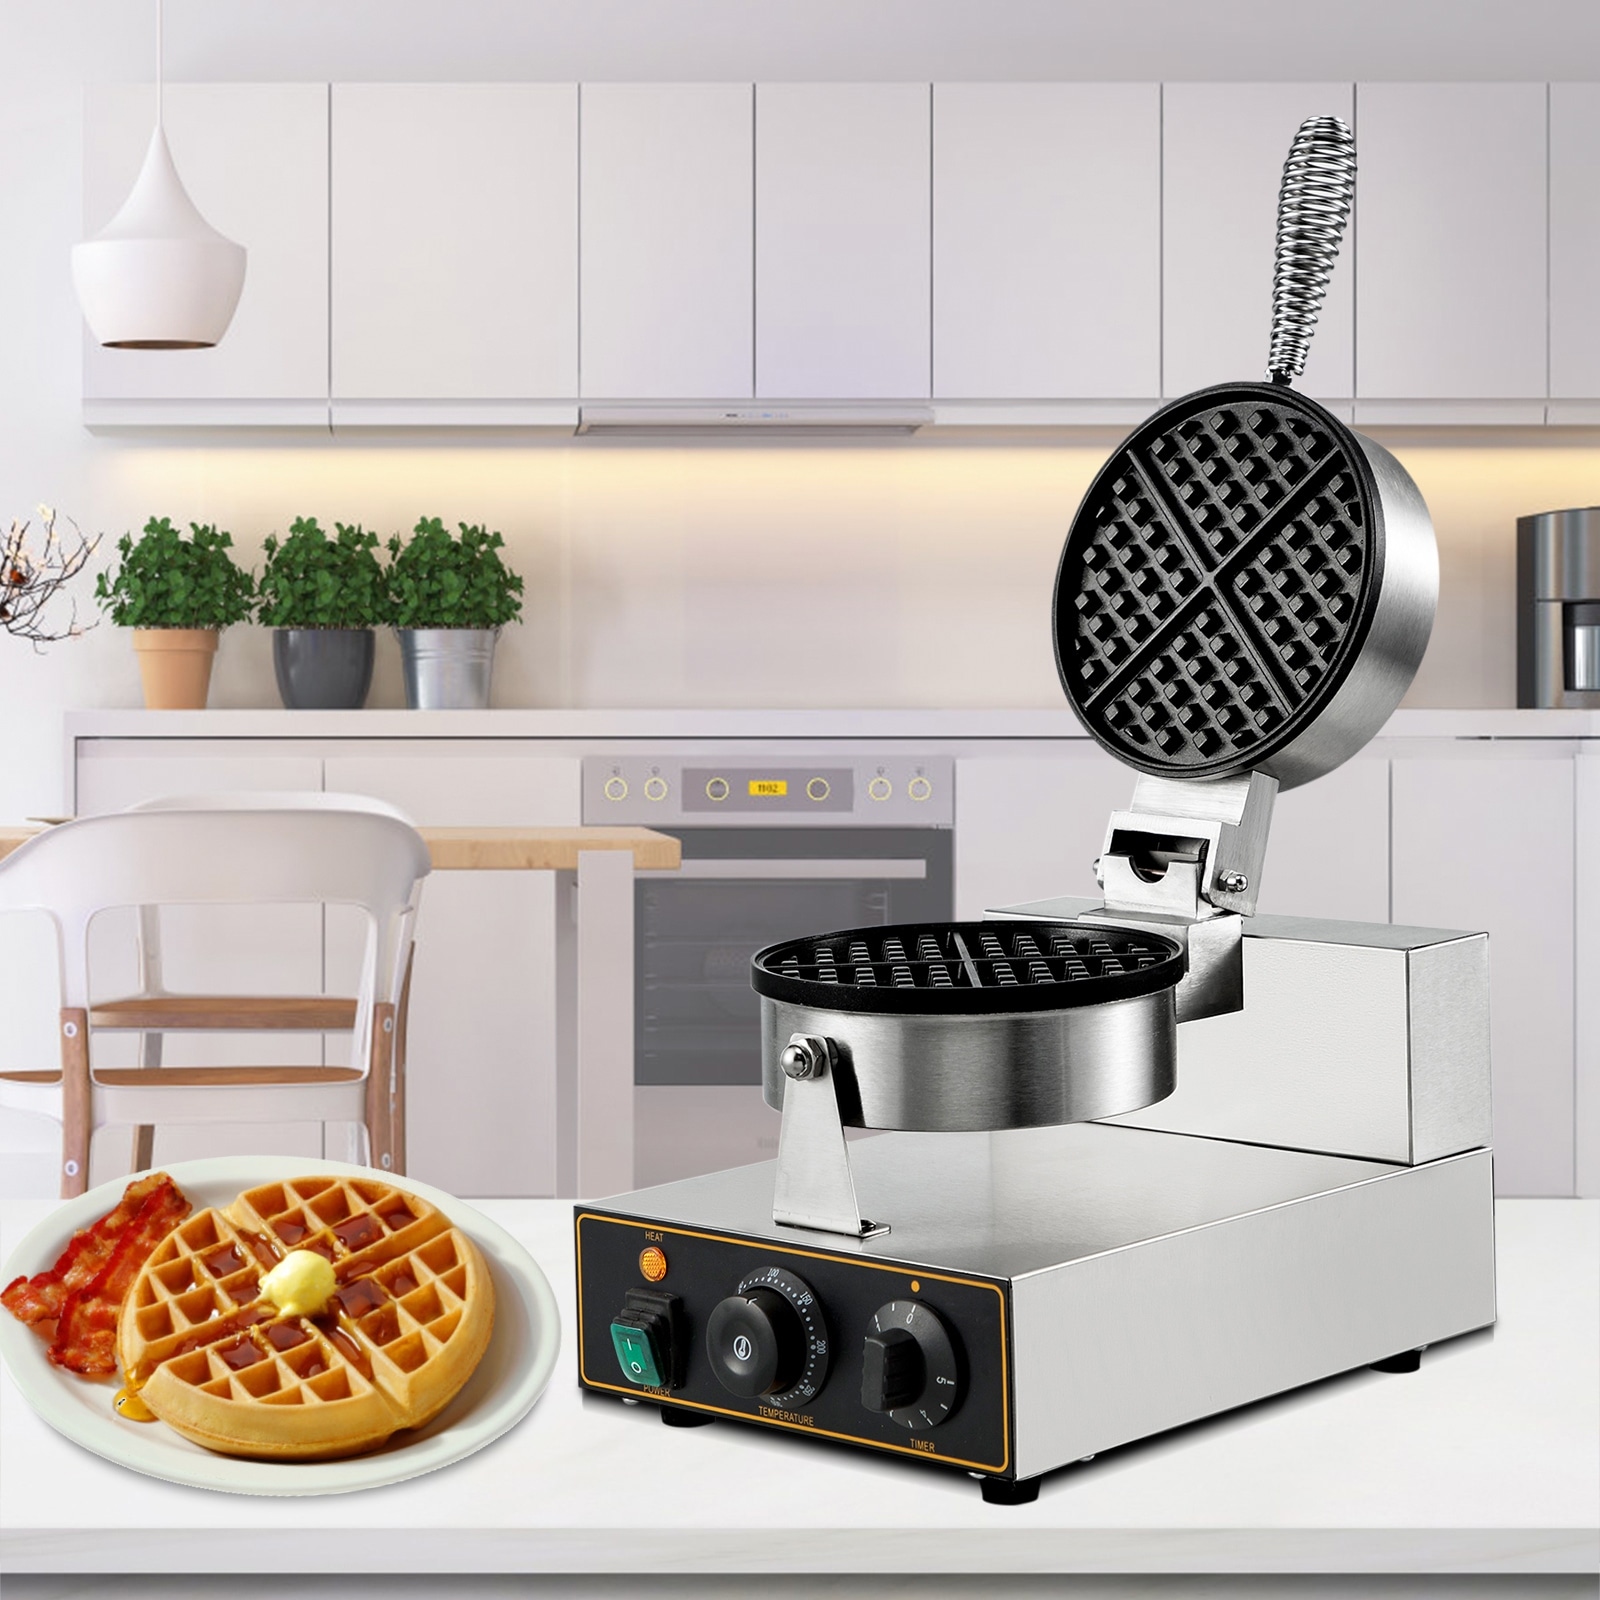 Mini Dutch Pancake Baker Waffle Cone 50 PCS 1700 W Commercial Electric  Waffle Maker Machine 1.8 in. for Restaurants